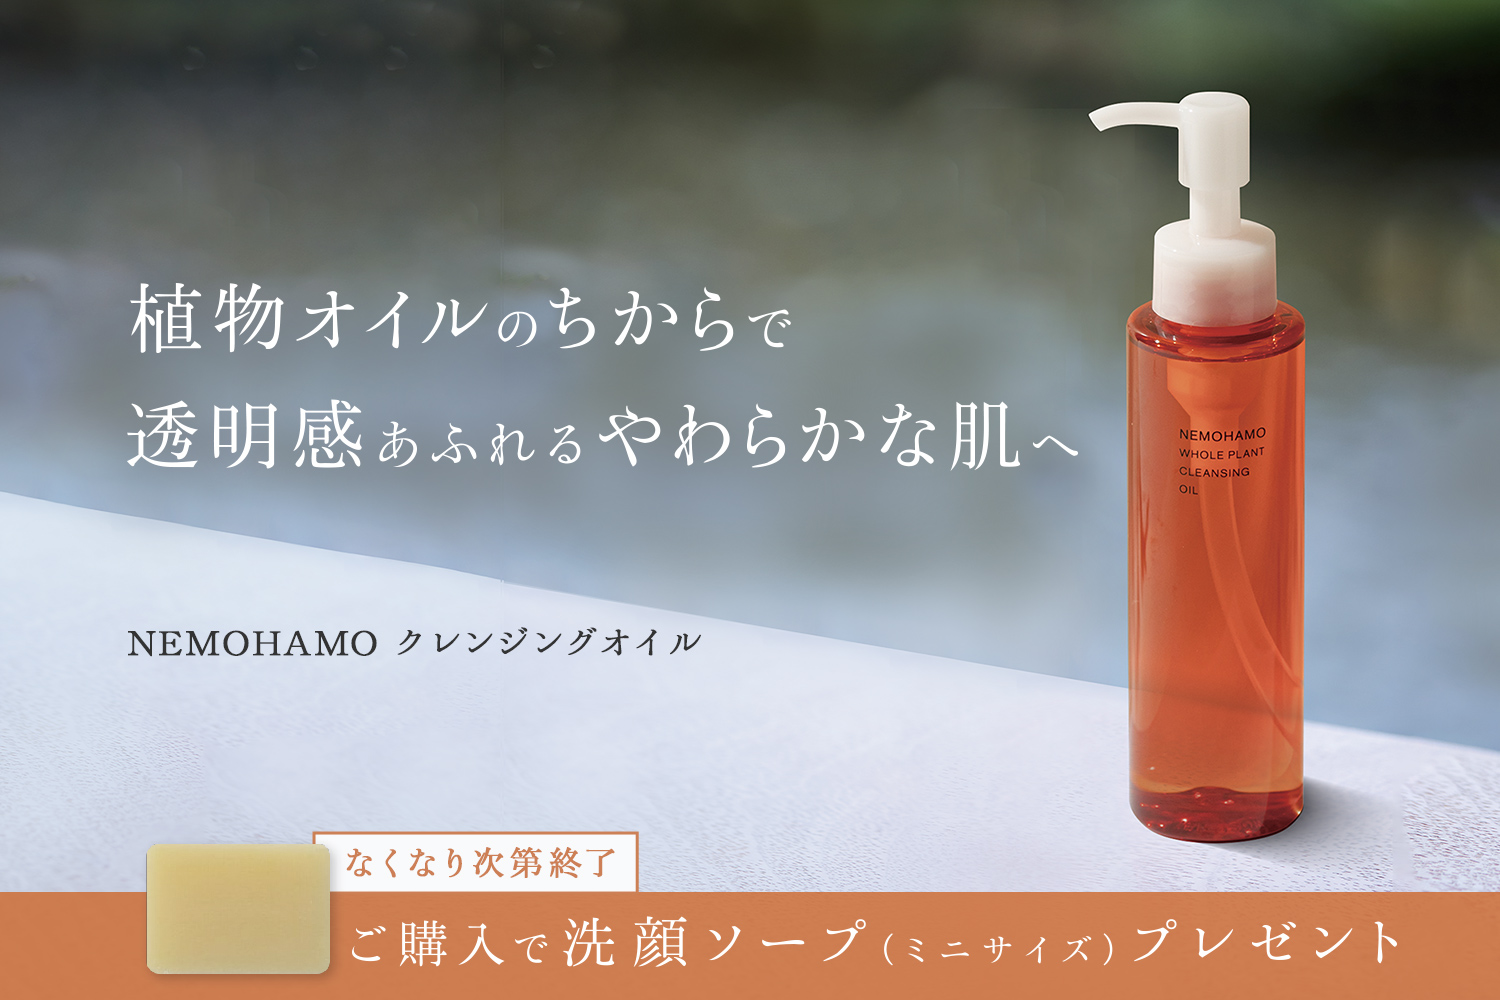 NEMOHAMO クレンジングオイルをご購入の方に『ミニサイズ洗顔ソープ』をプレゼント